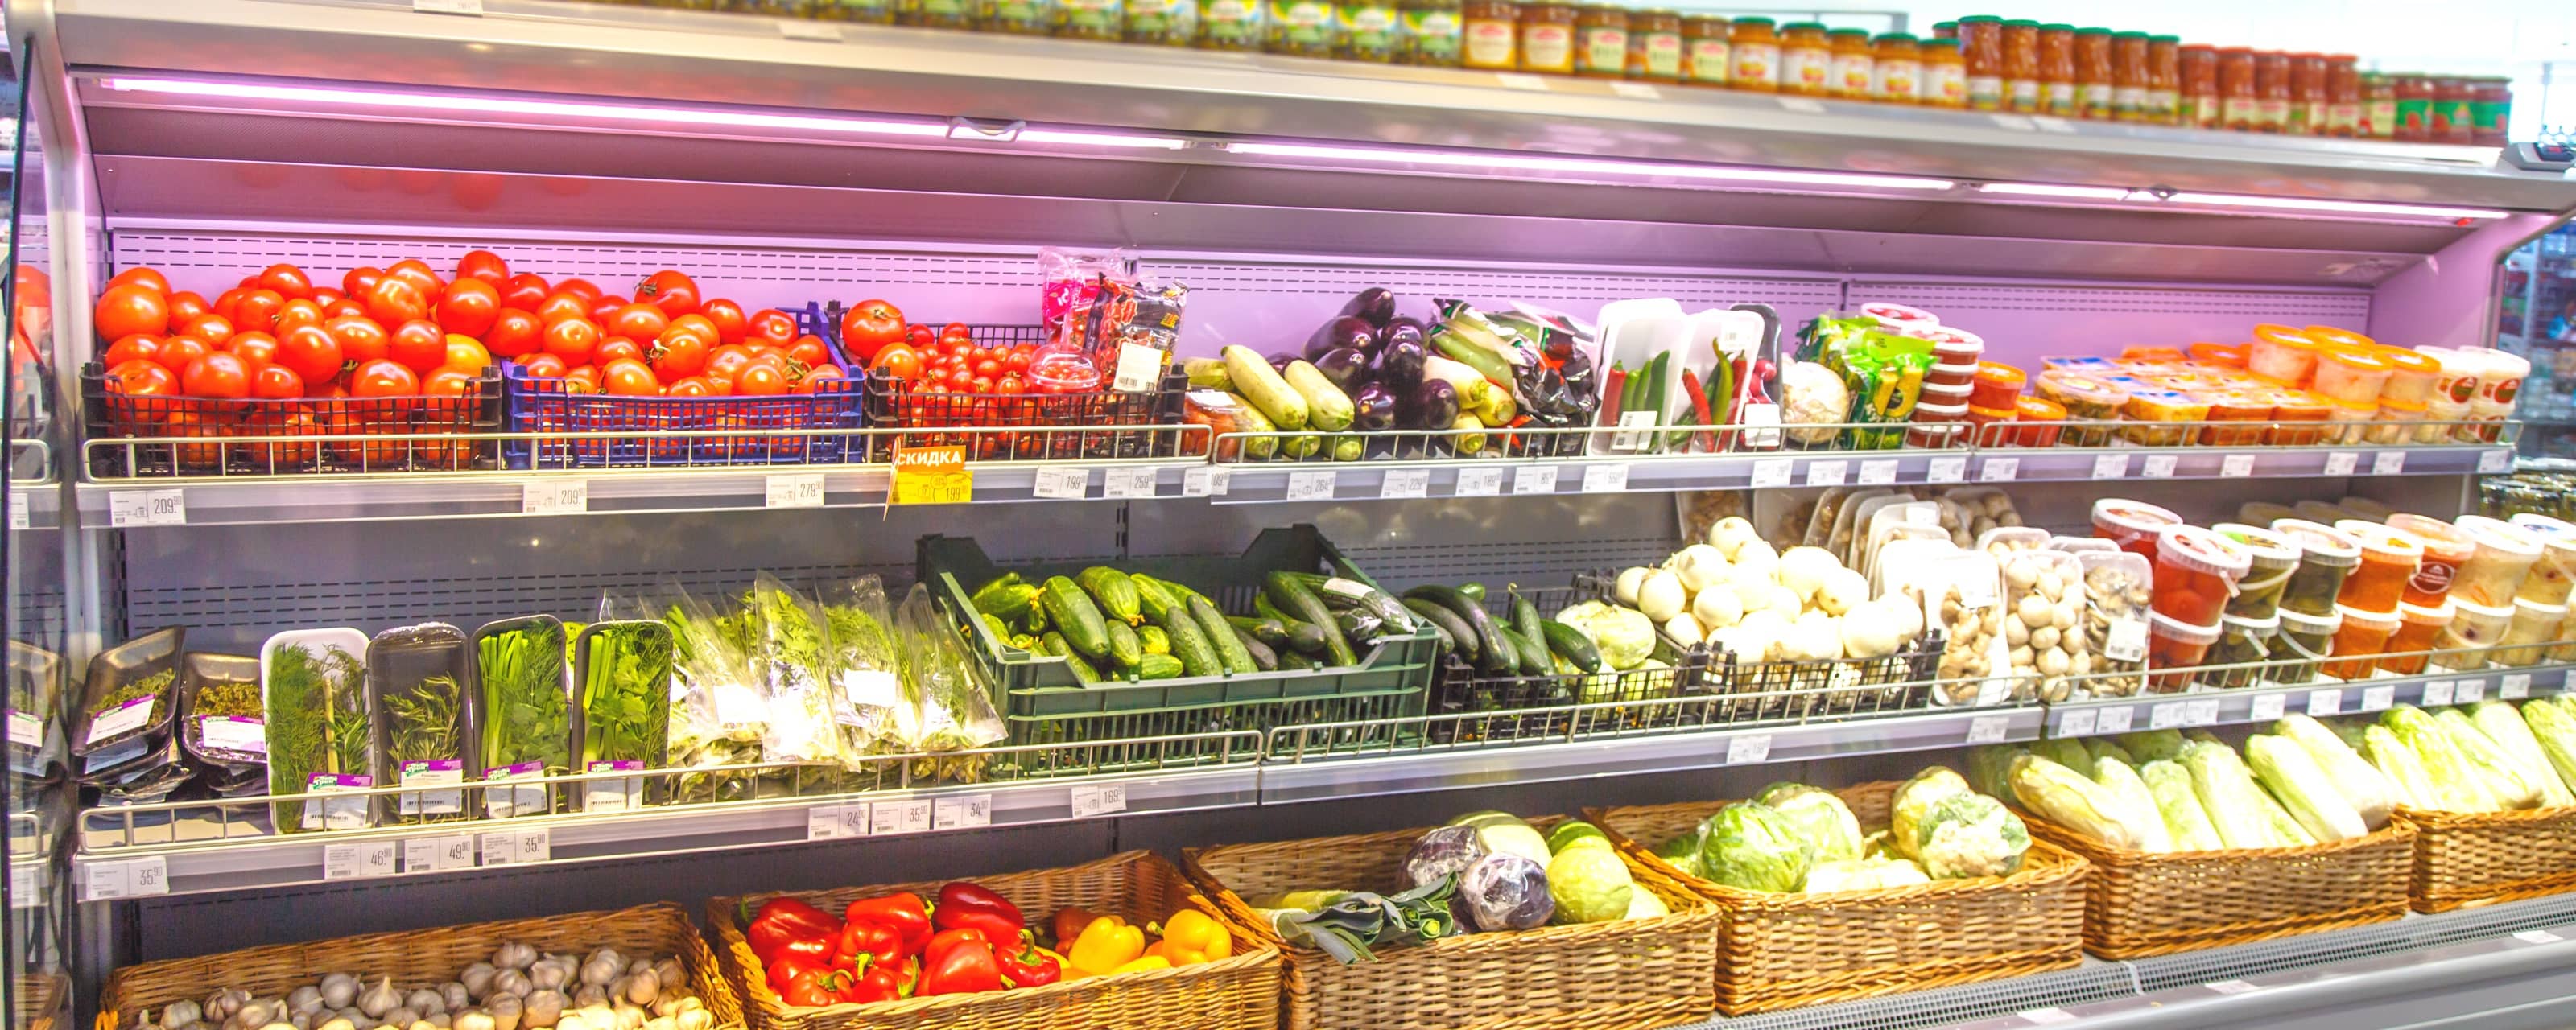 Fresh produce aisle on display